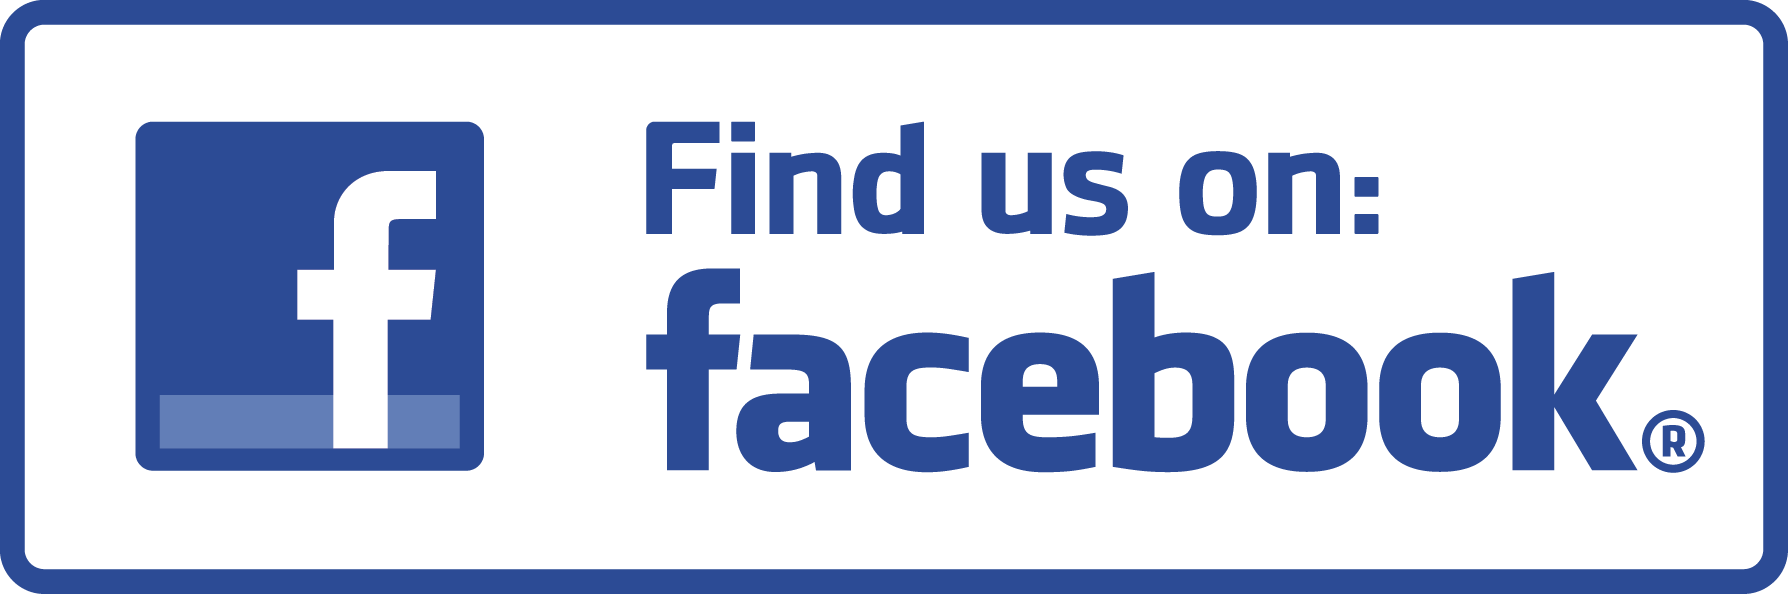 sbam-survey-facebook-favorite-social-media-platform-to-gain-new-small